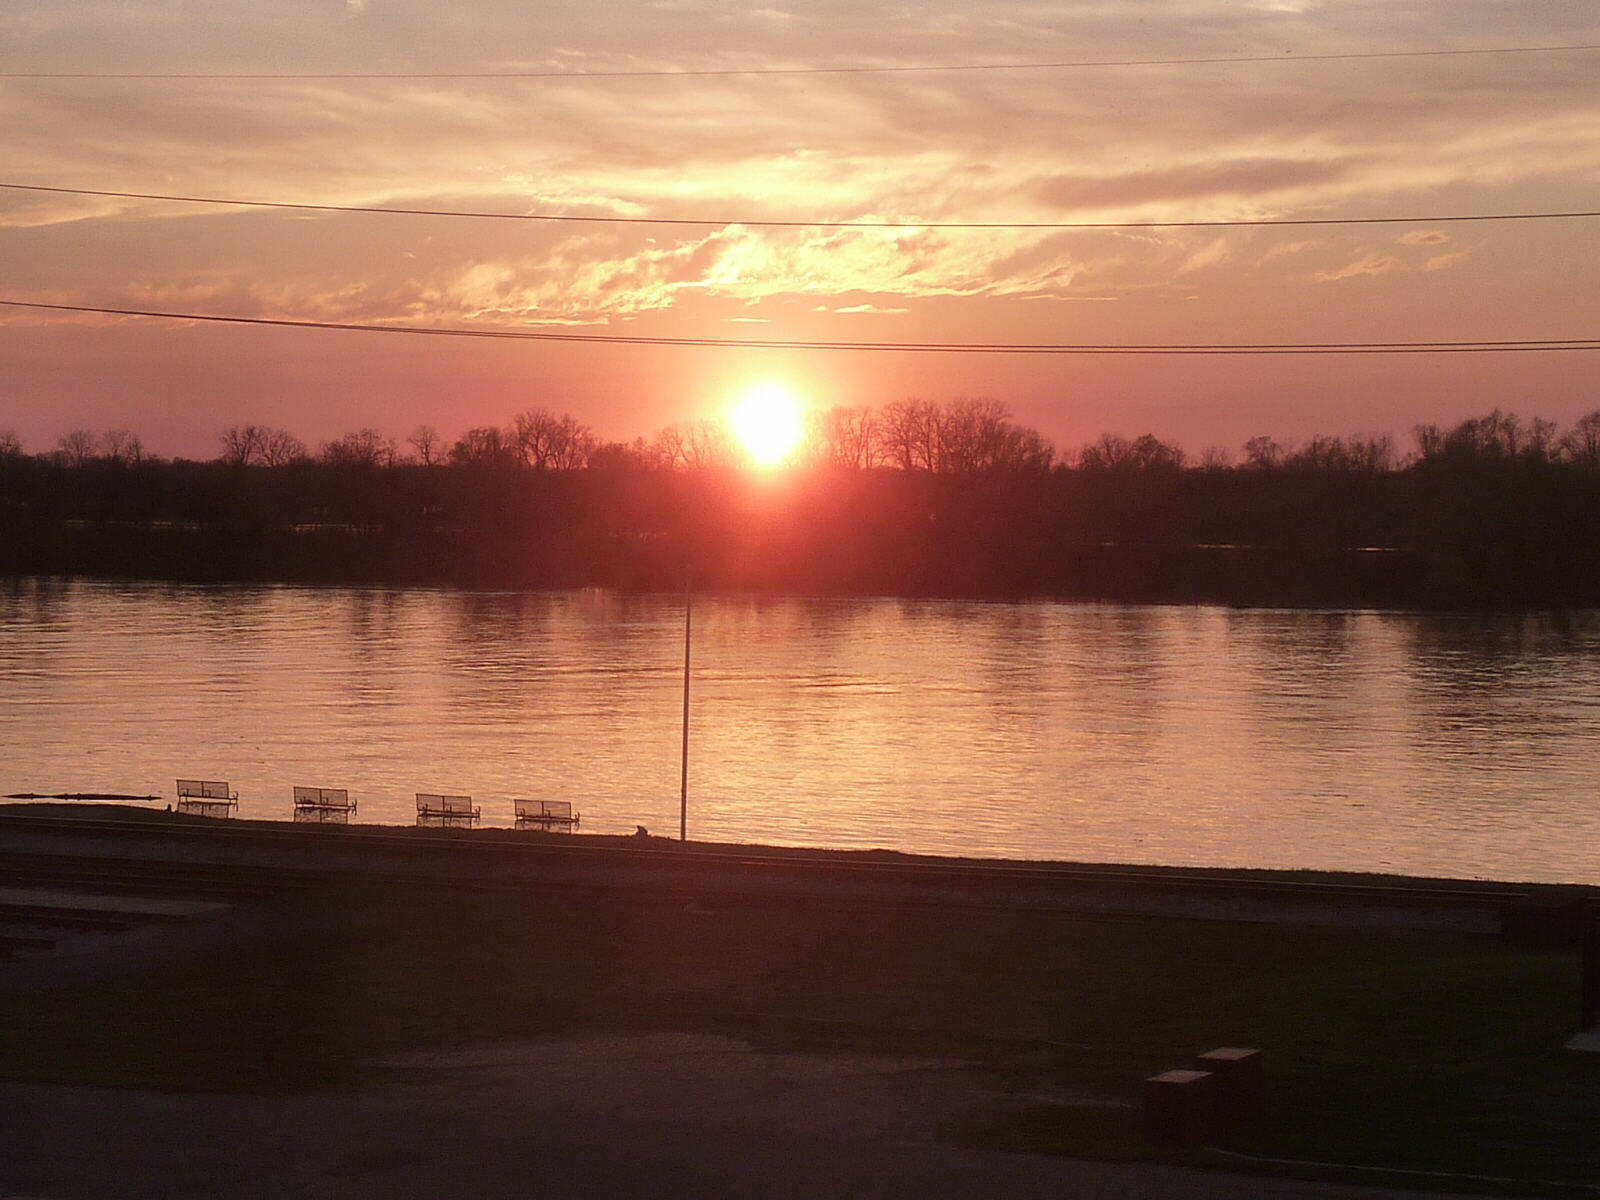 Sunset over the Mississippi river at Vicksburg